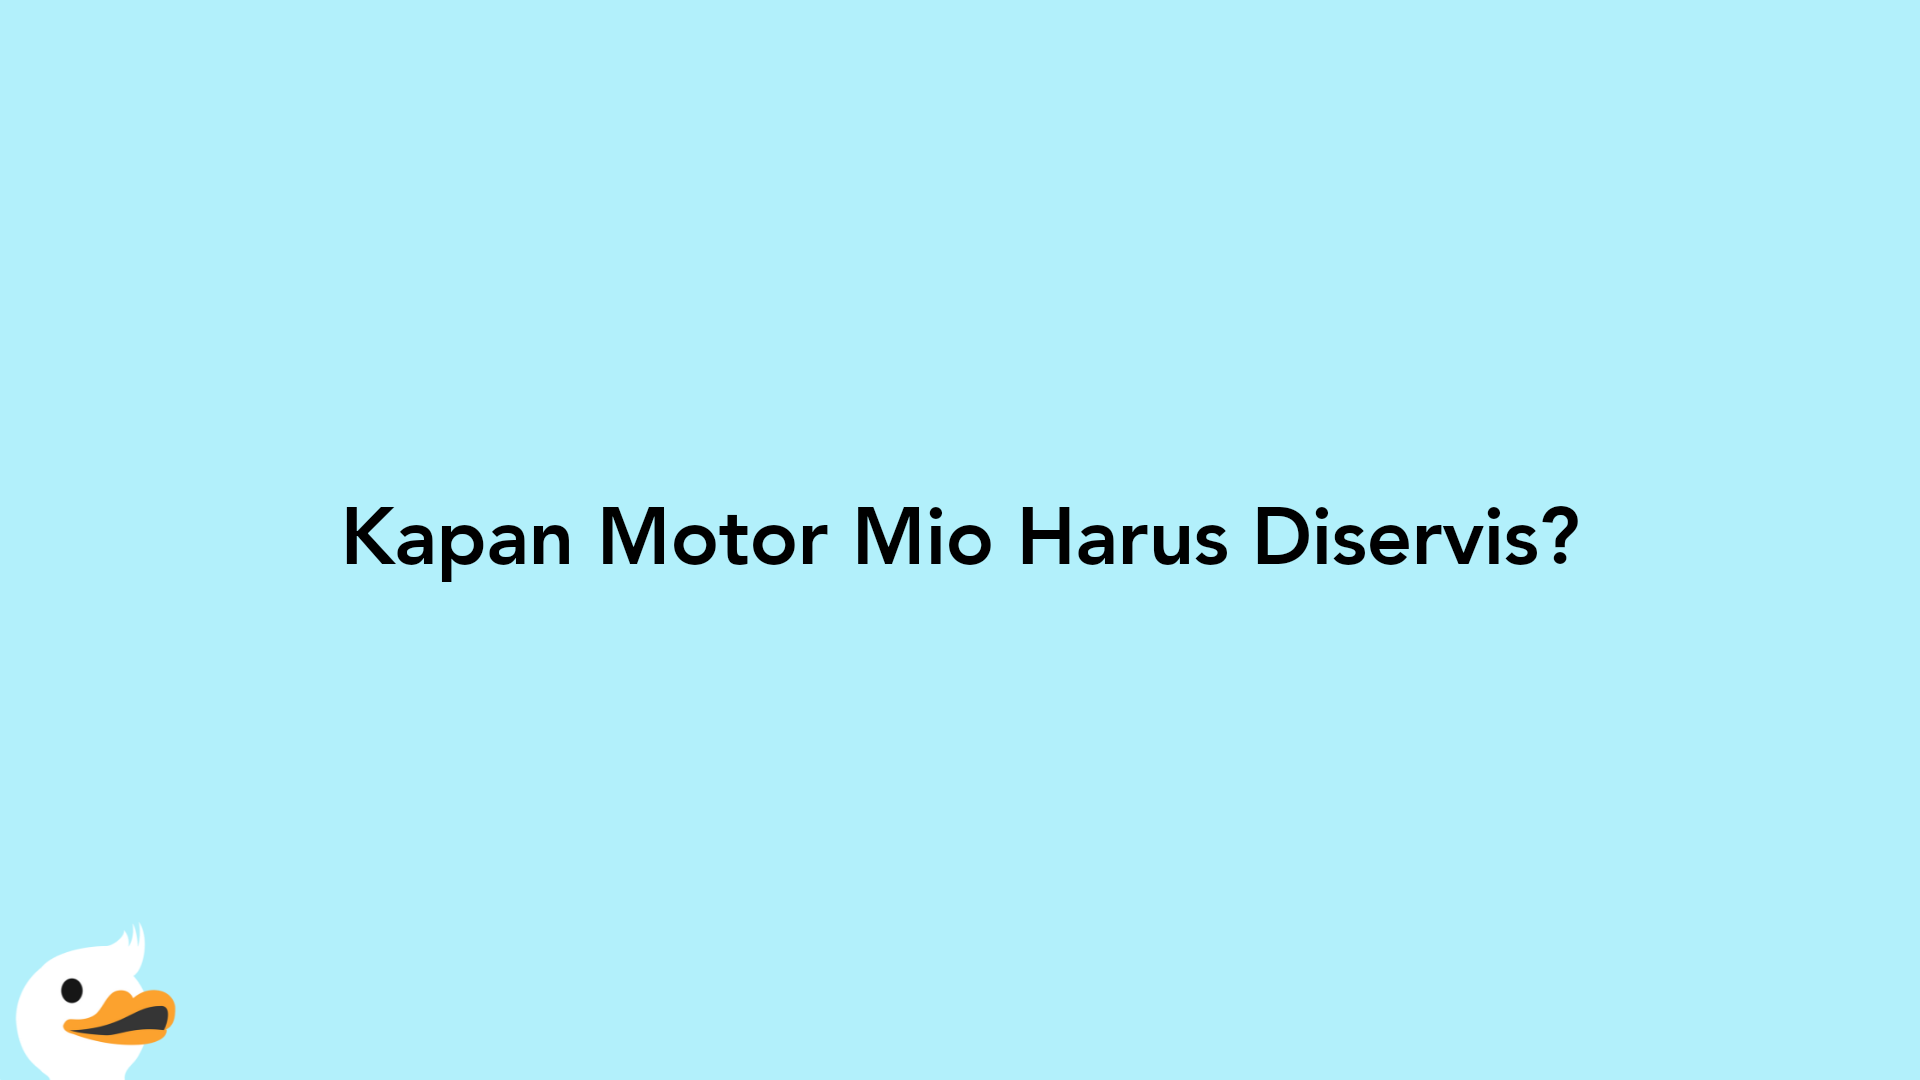 Kapan Motor Mio Harus Diservis?